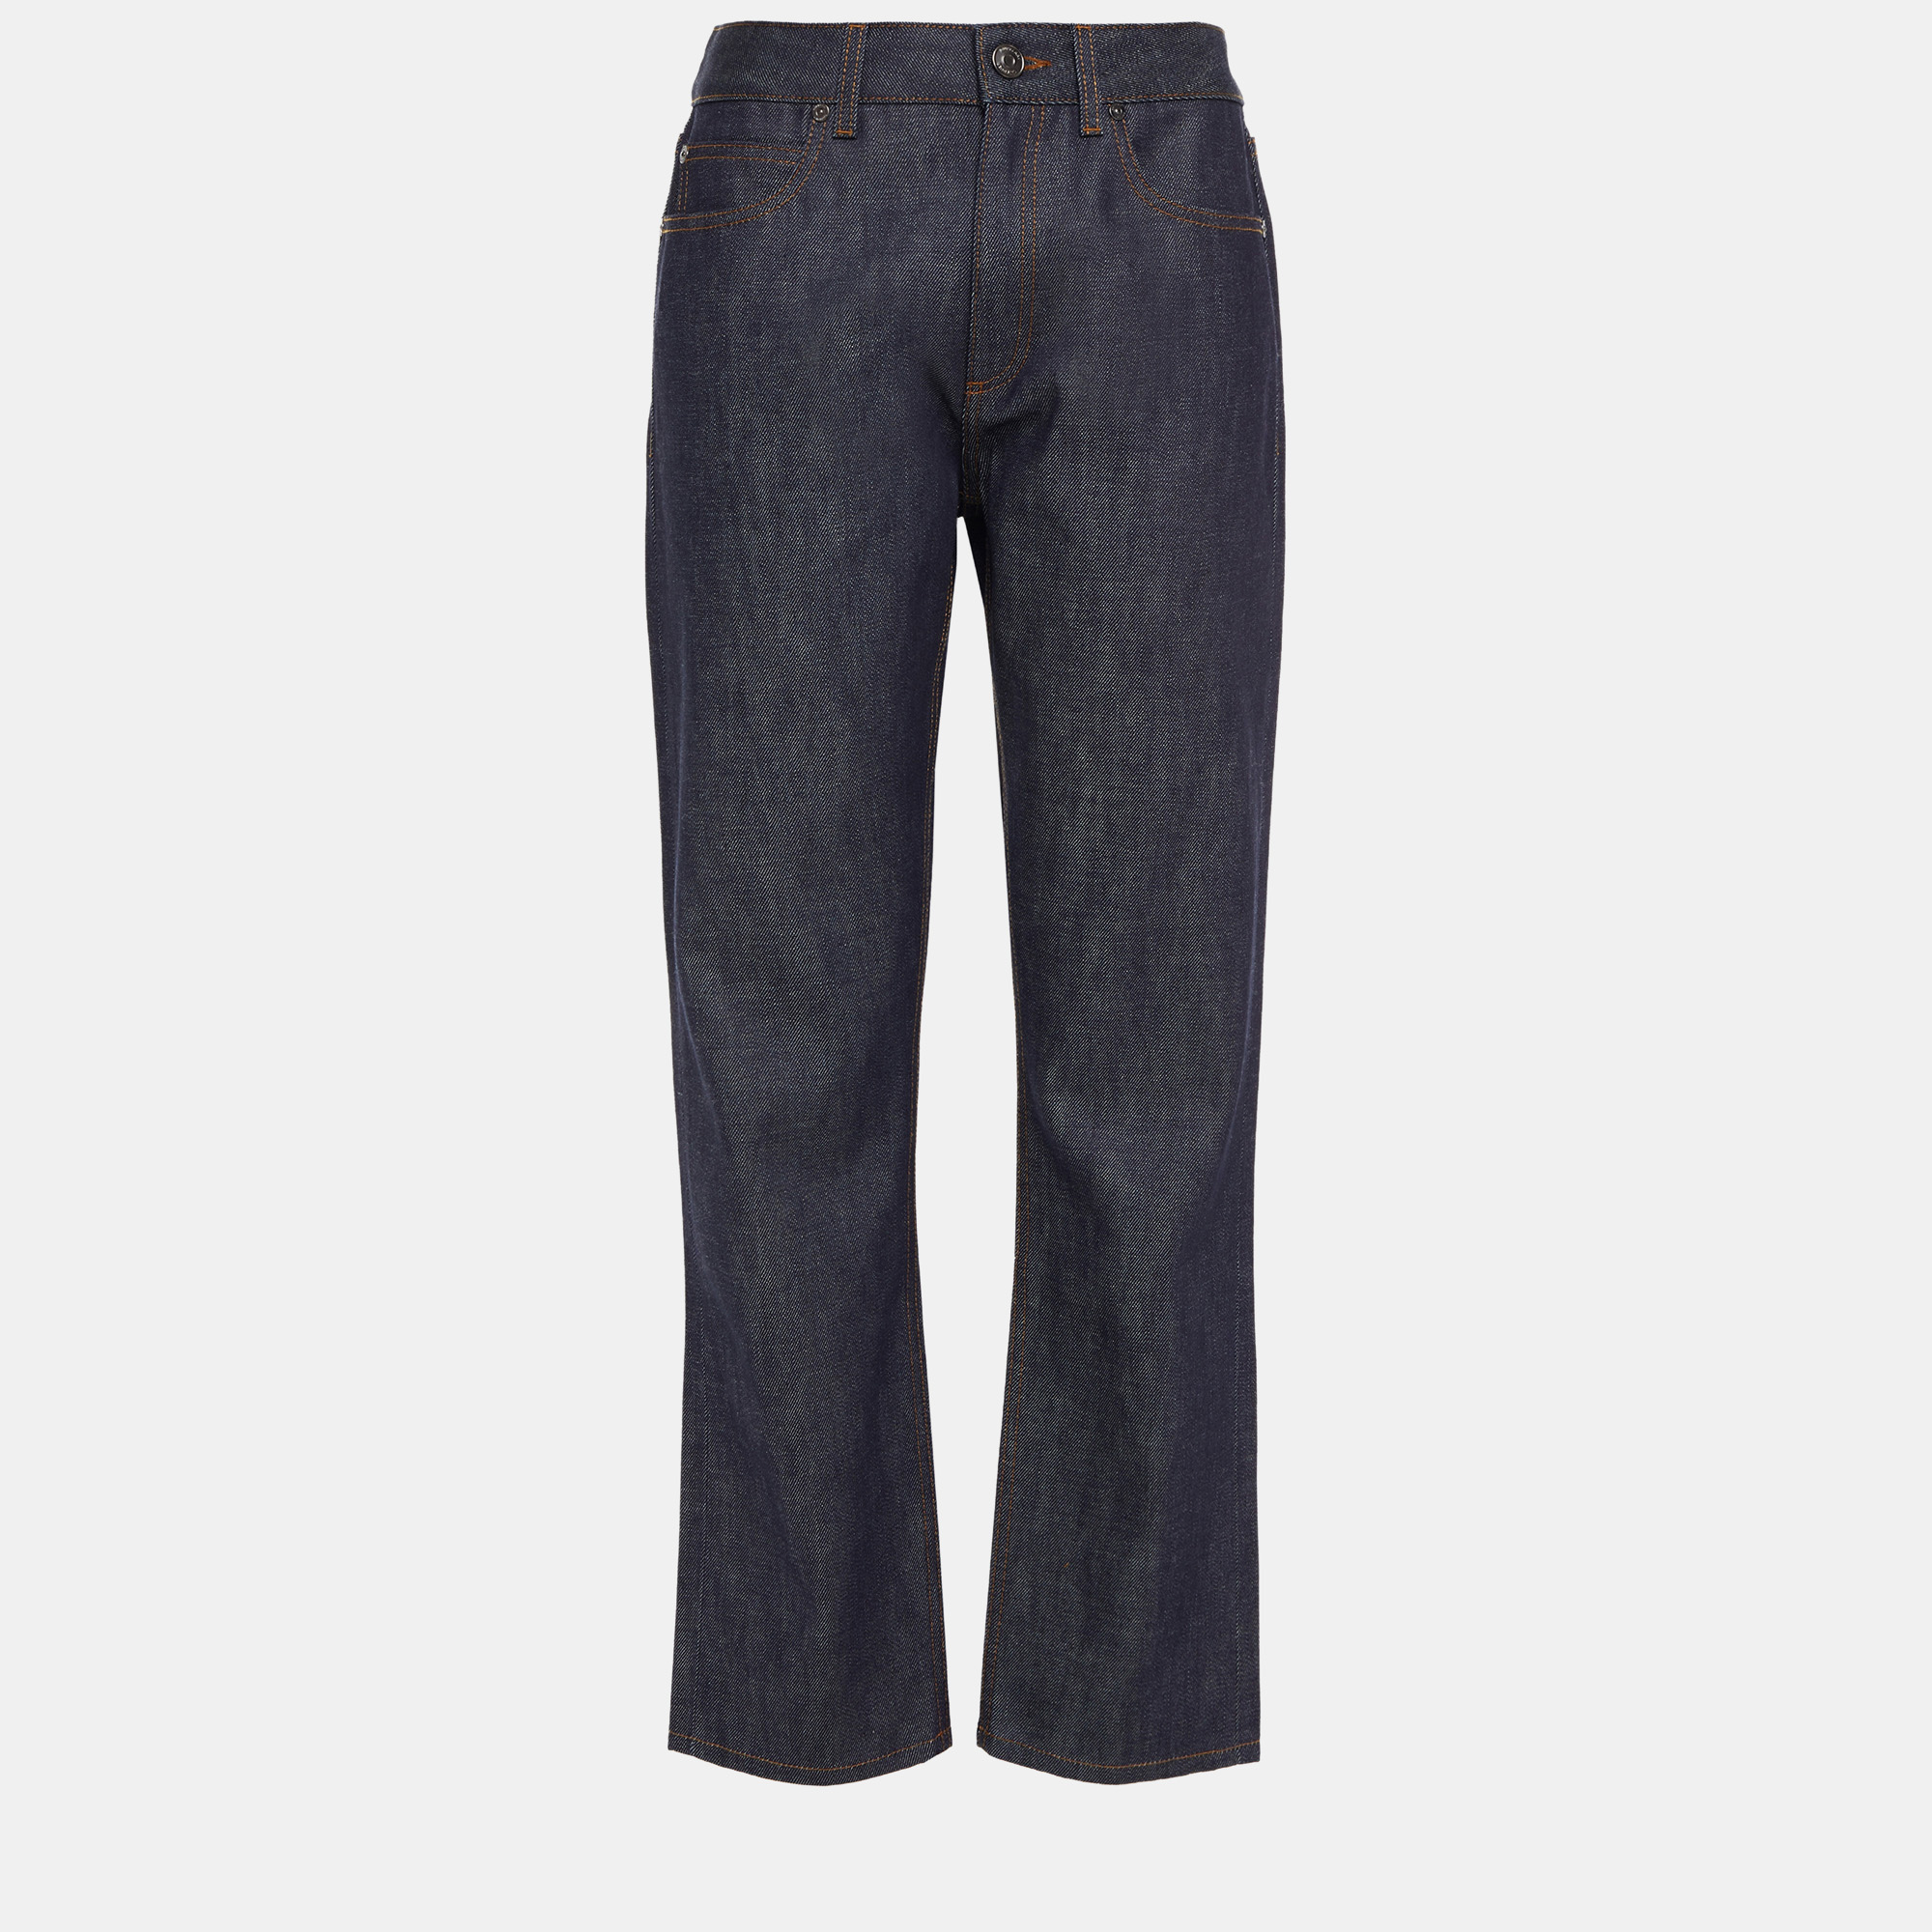 Burberry cotton straight leg jeans 31